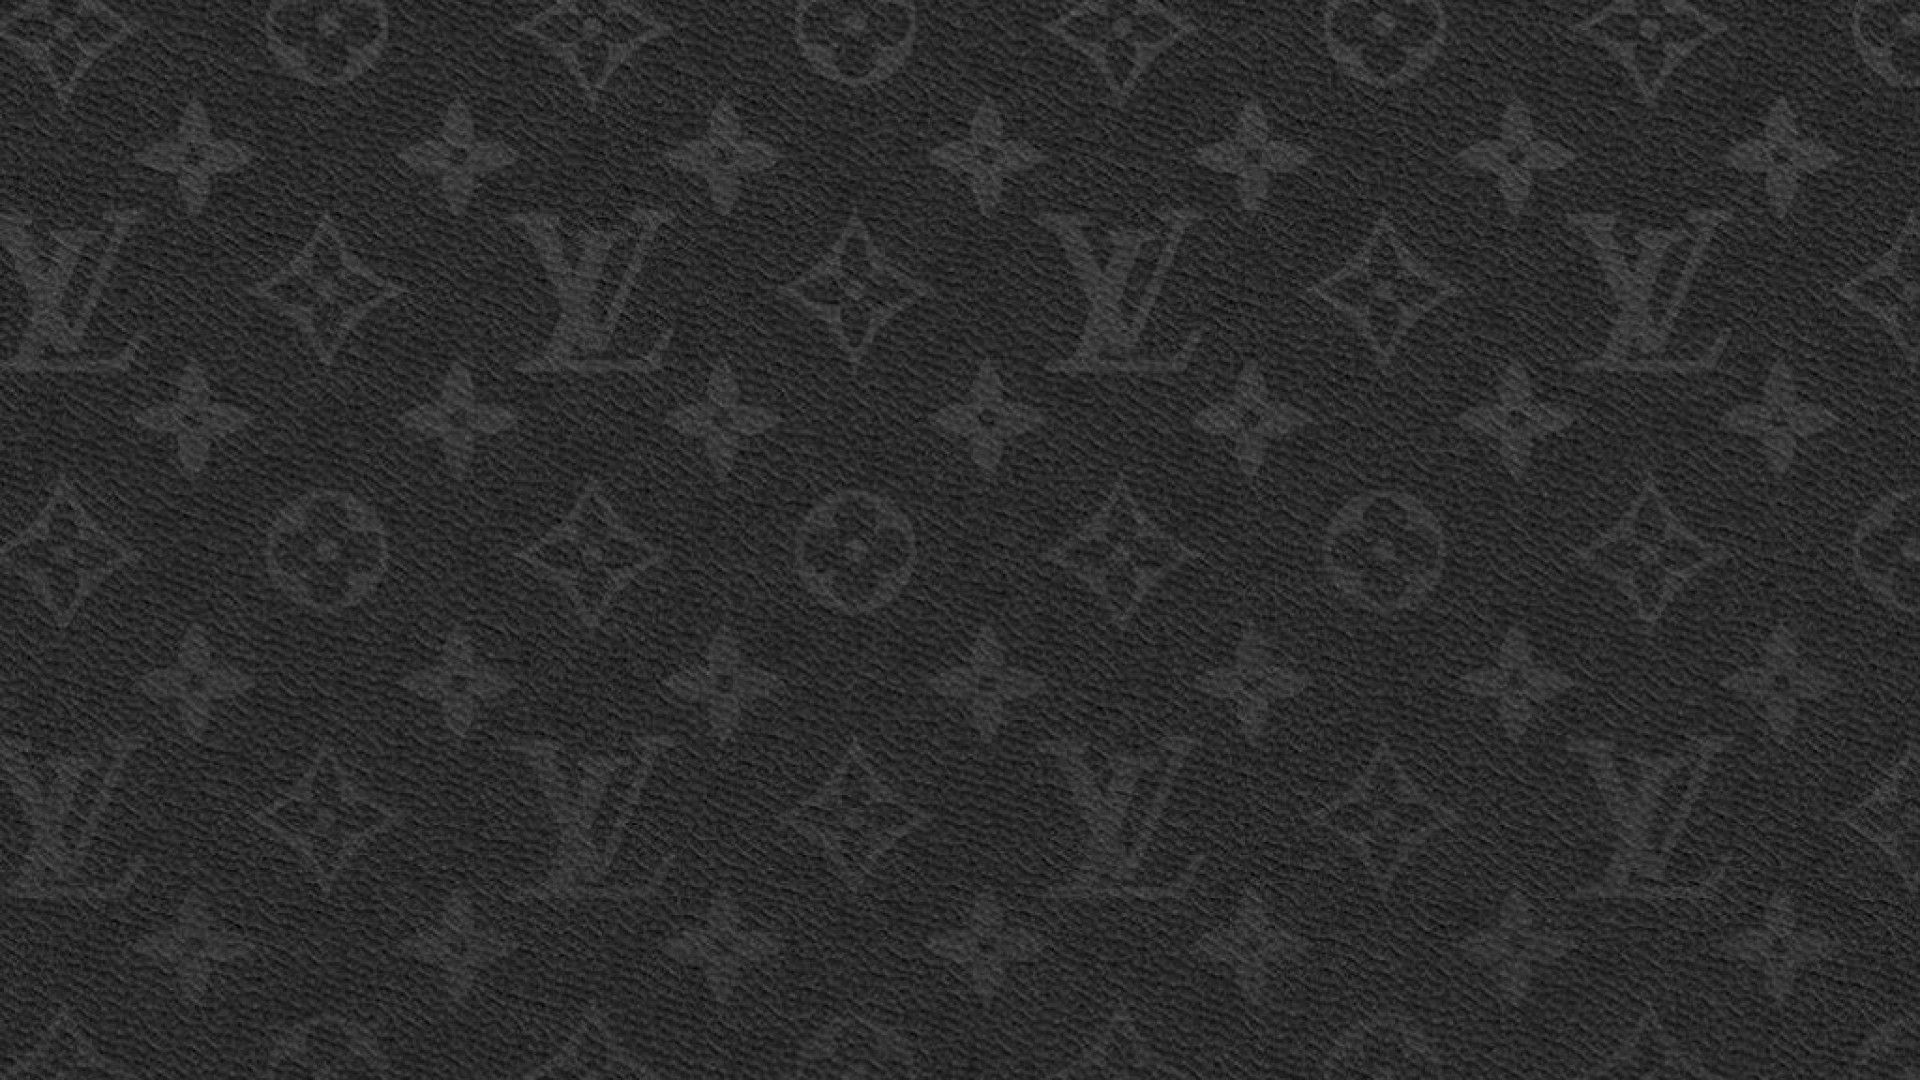 Louis Vuitton wallpapers